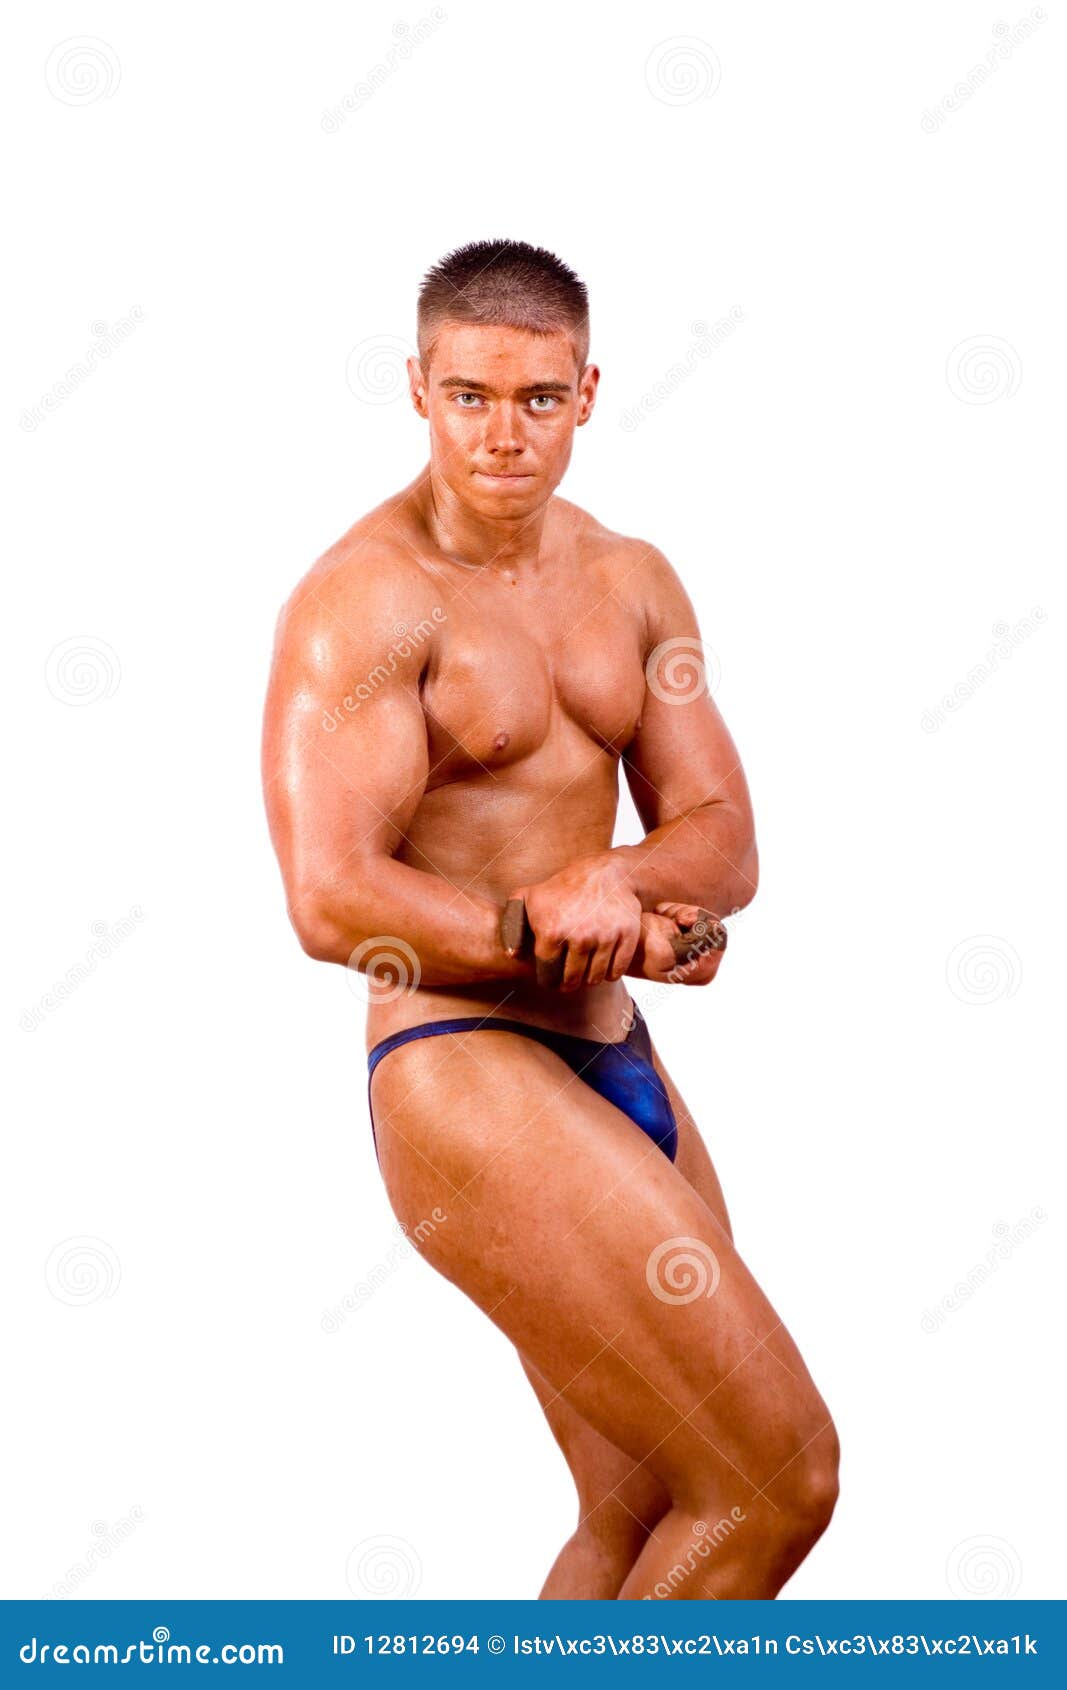 Amateur Male Body Gay Fetish photo